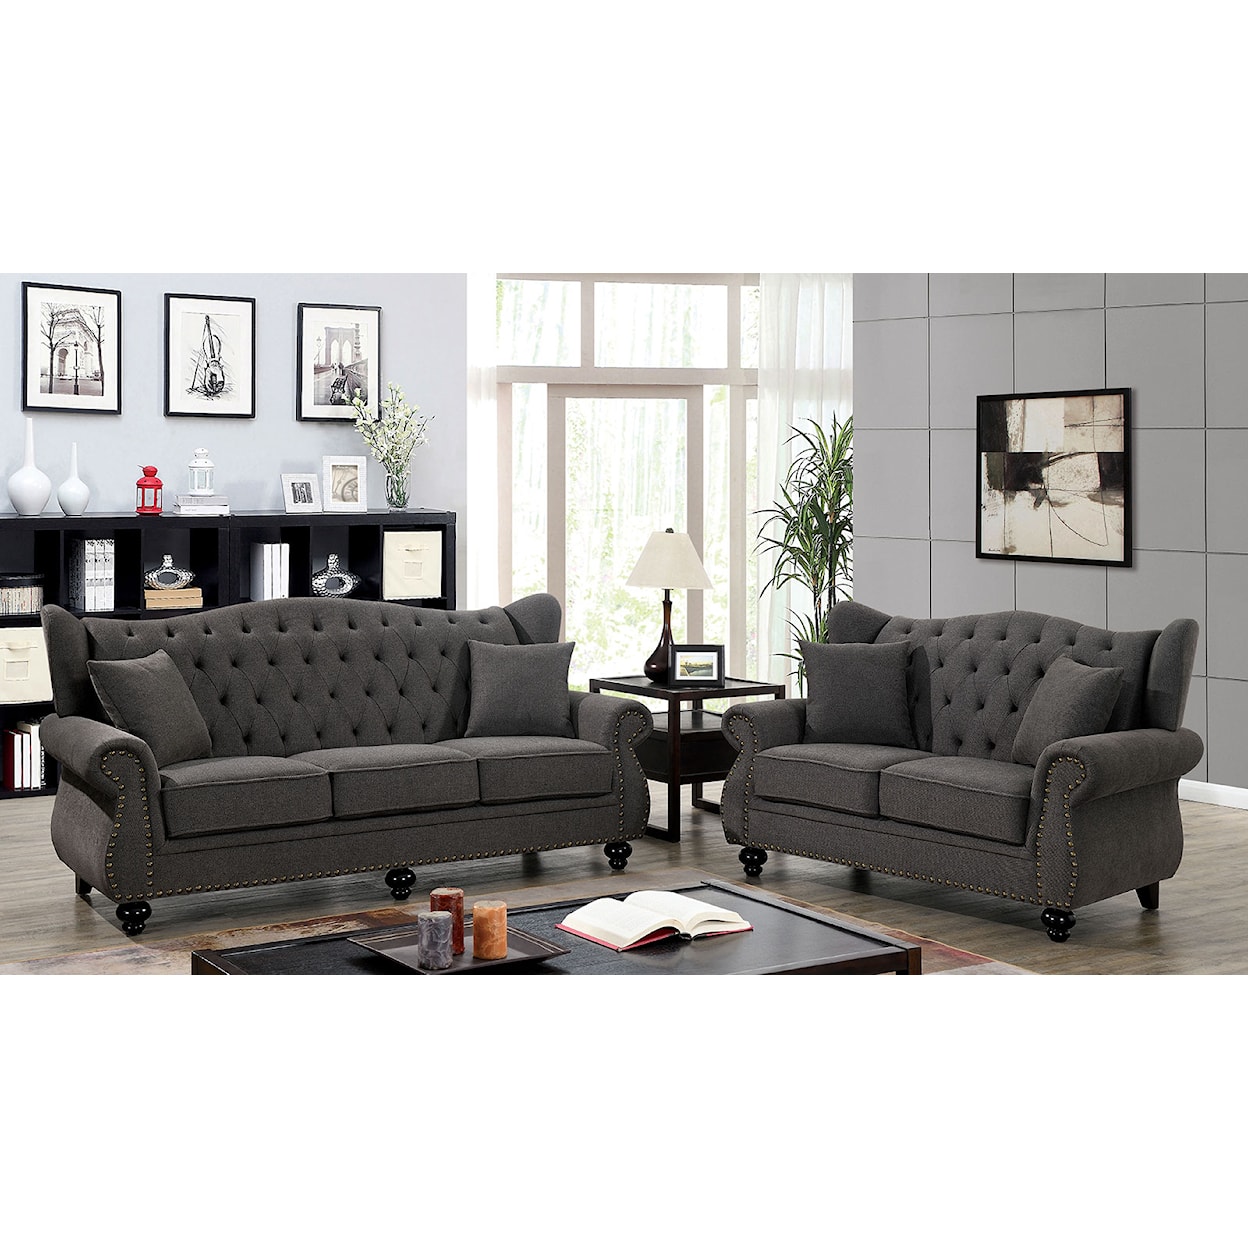 Furniture of America Ewloe Sofa and Loveseat Set 